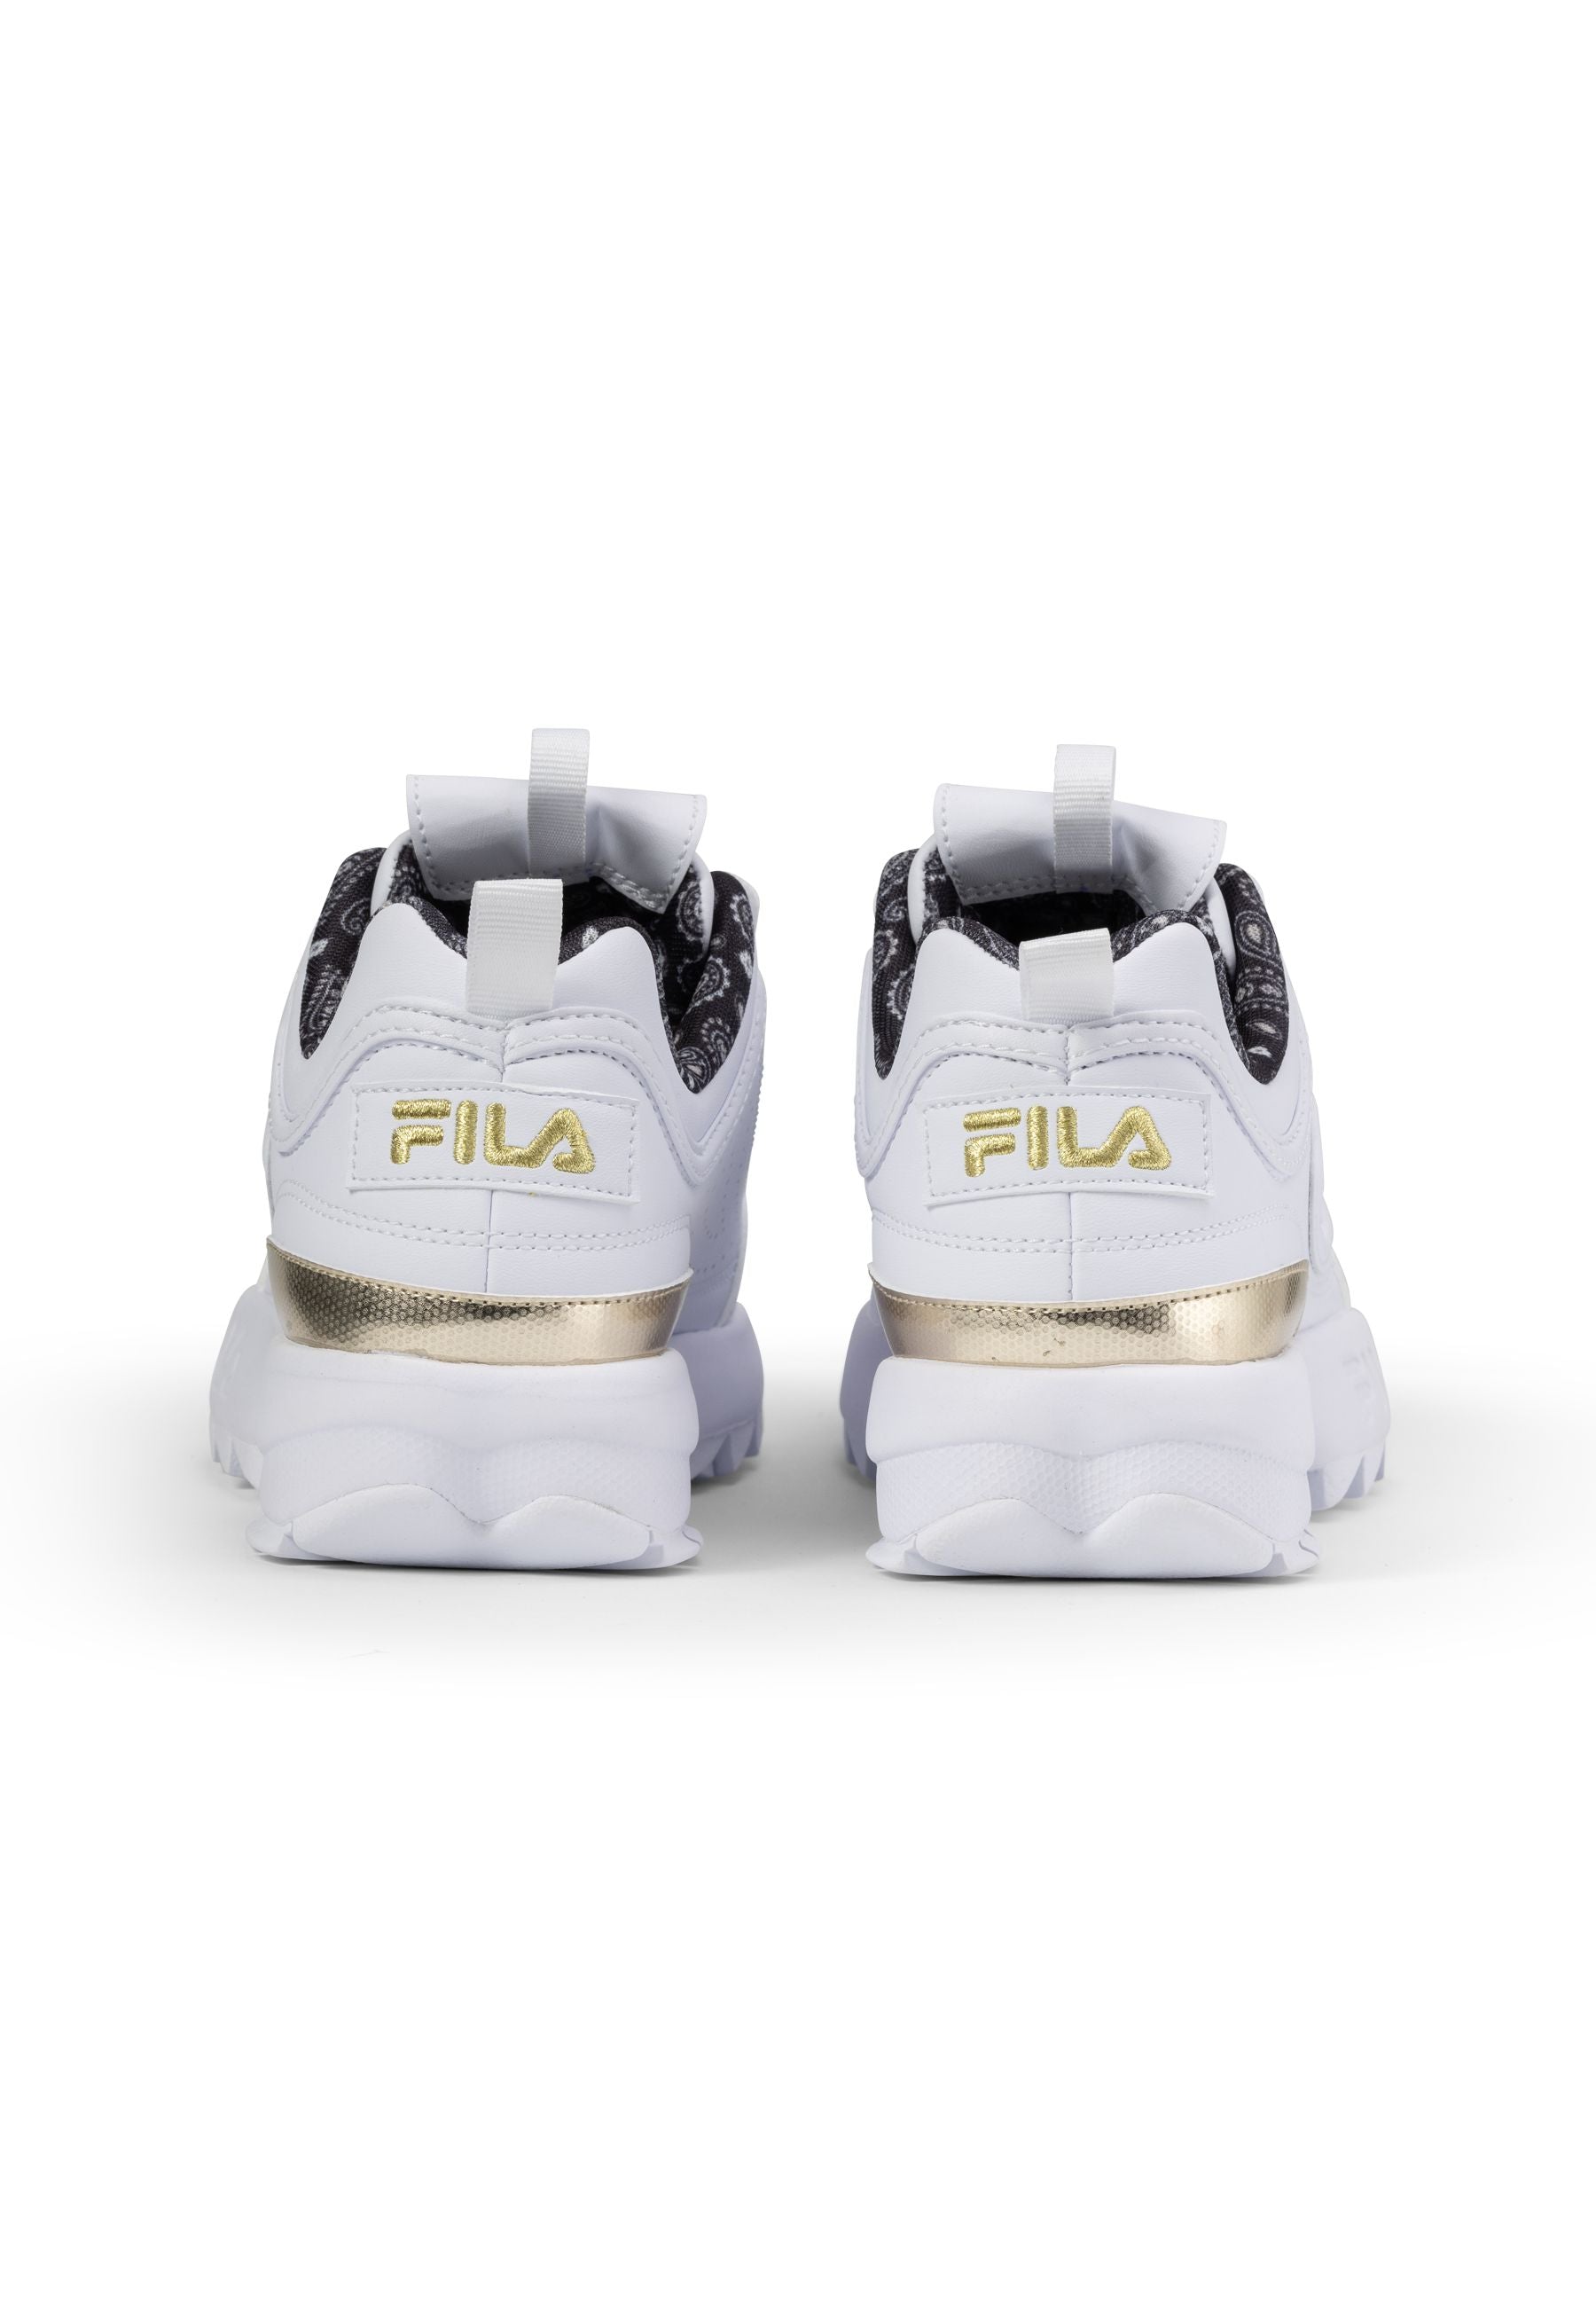 Disruptor P Wmn in White-Gold Sneakers Fila   